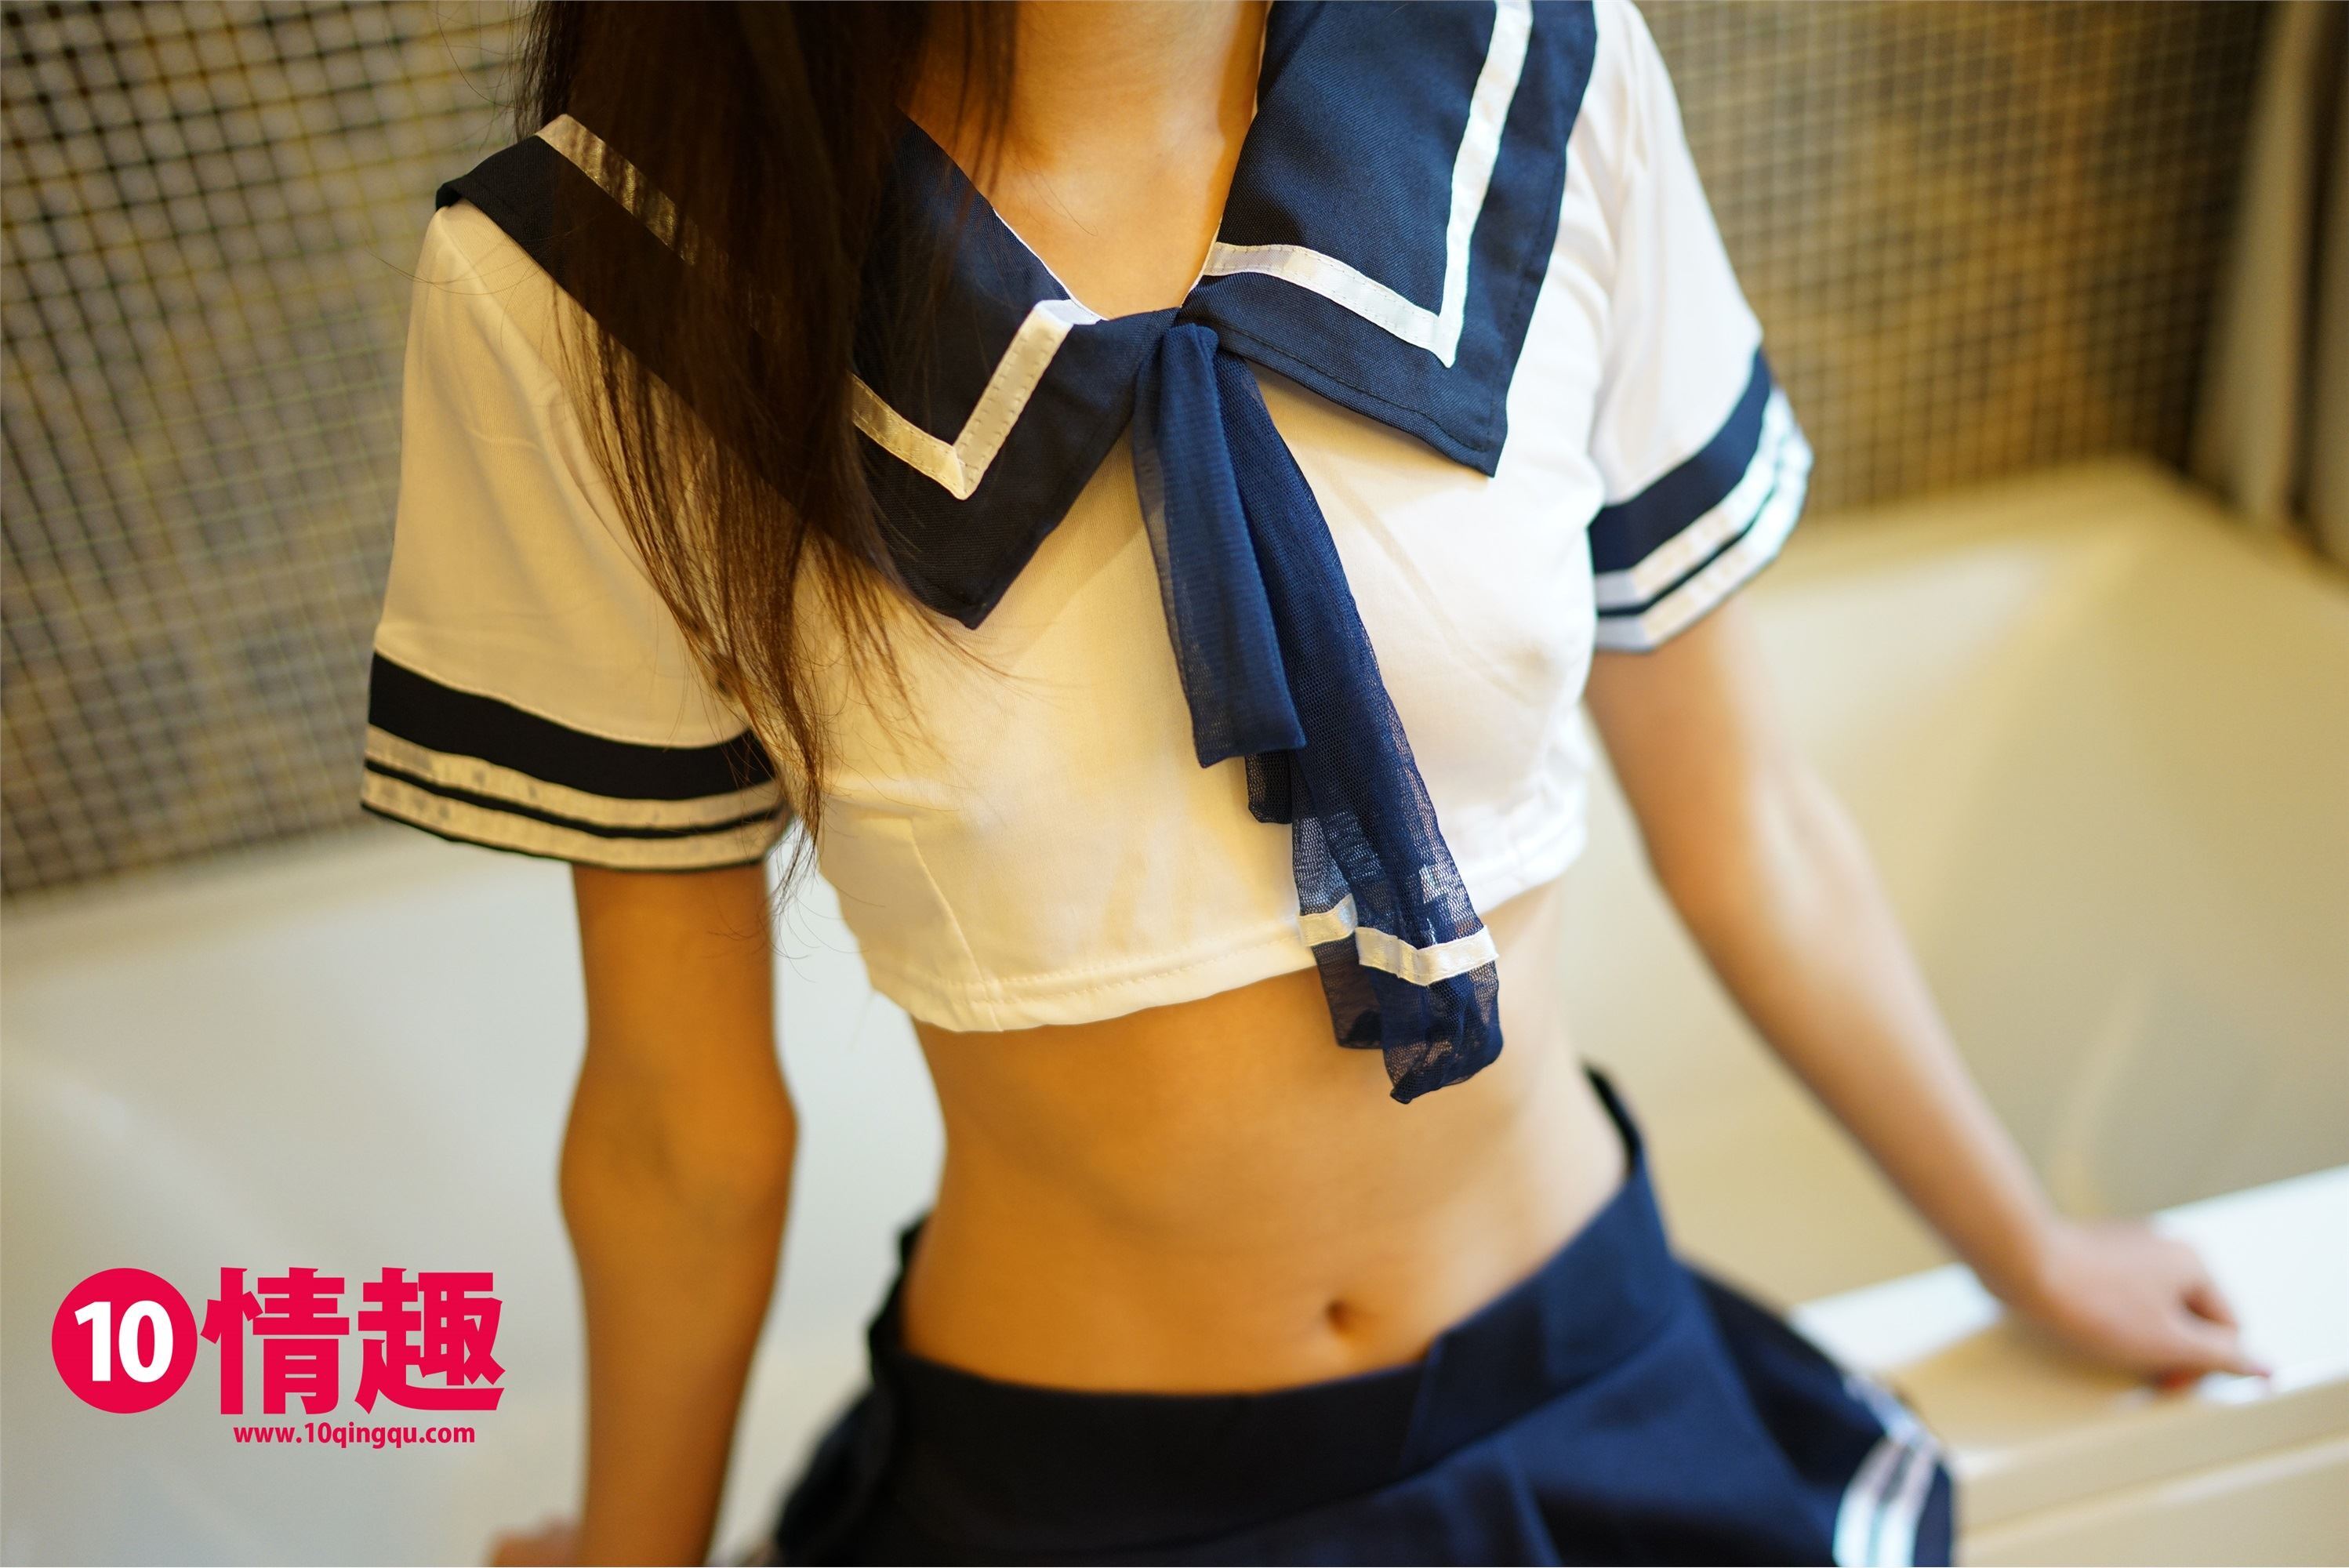 ROSI10 Fun 2015.09.15 No.014 Junior school girl uniform Seduction set